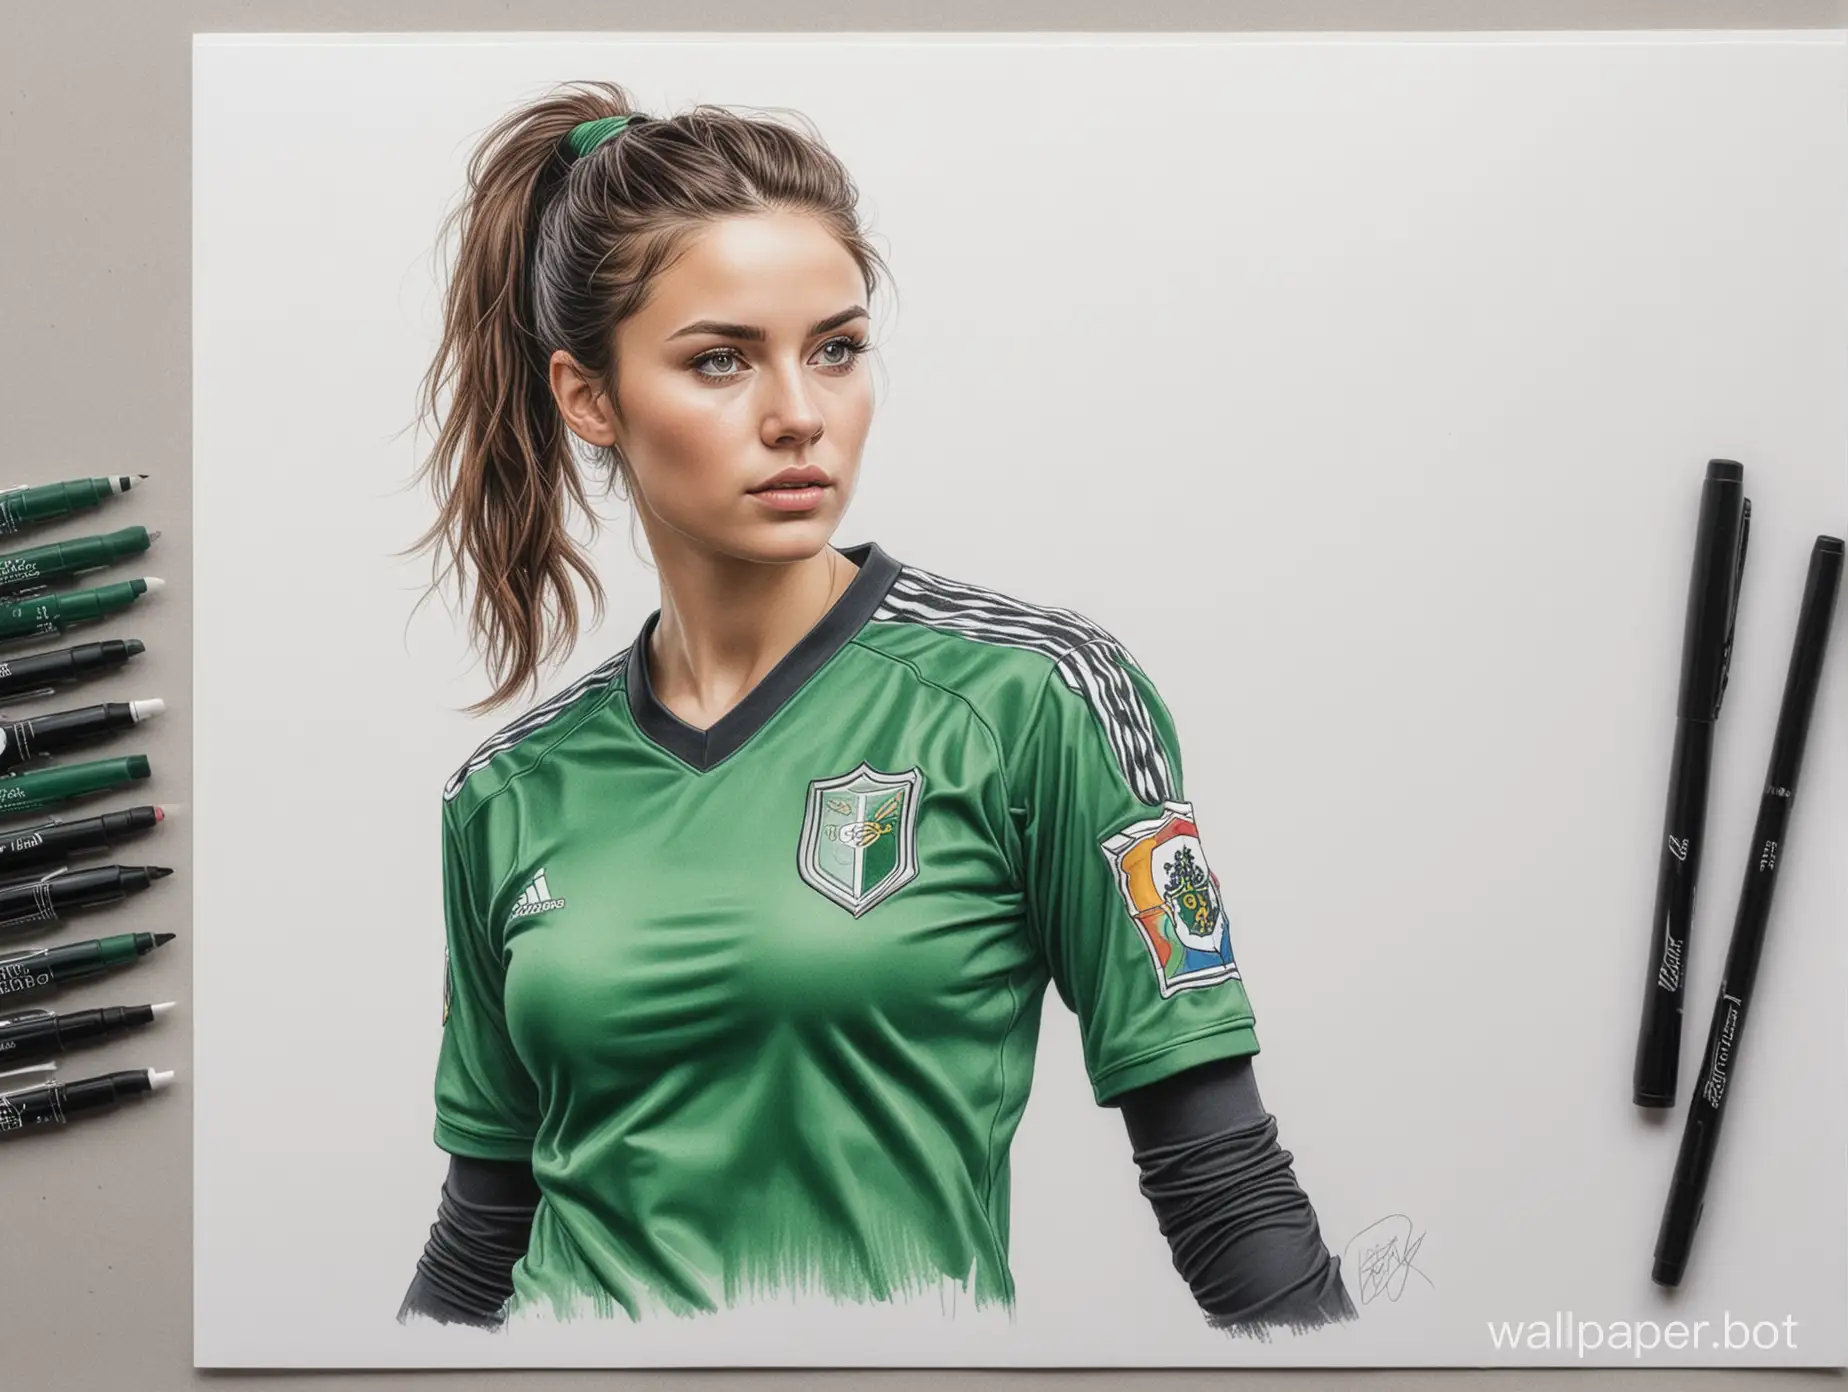 Young-Katarina-Noyner-Sketch-Realistic-Portrait-in-BlackGreen-Soccer-Uniform